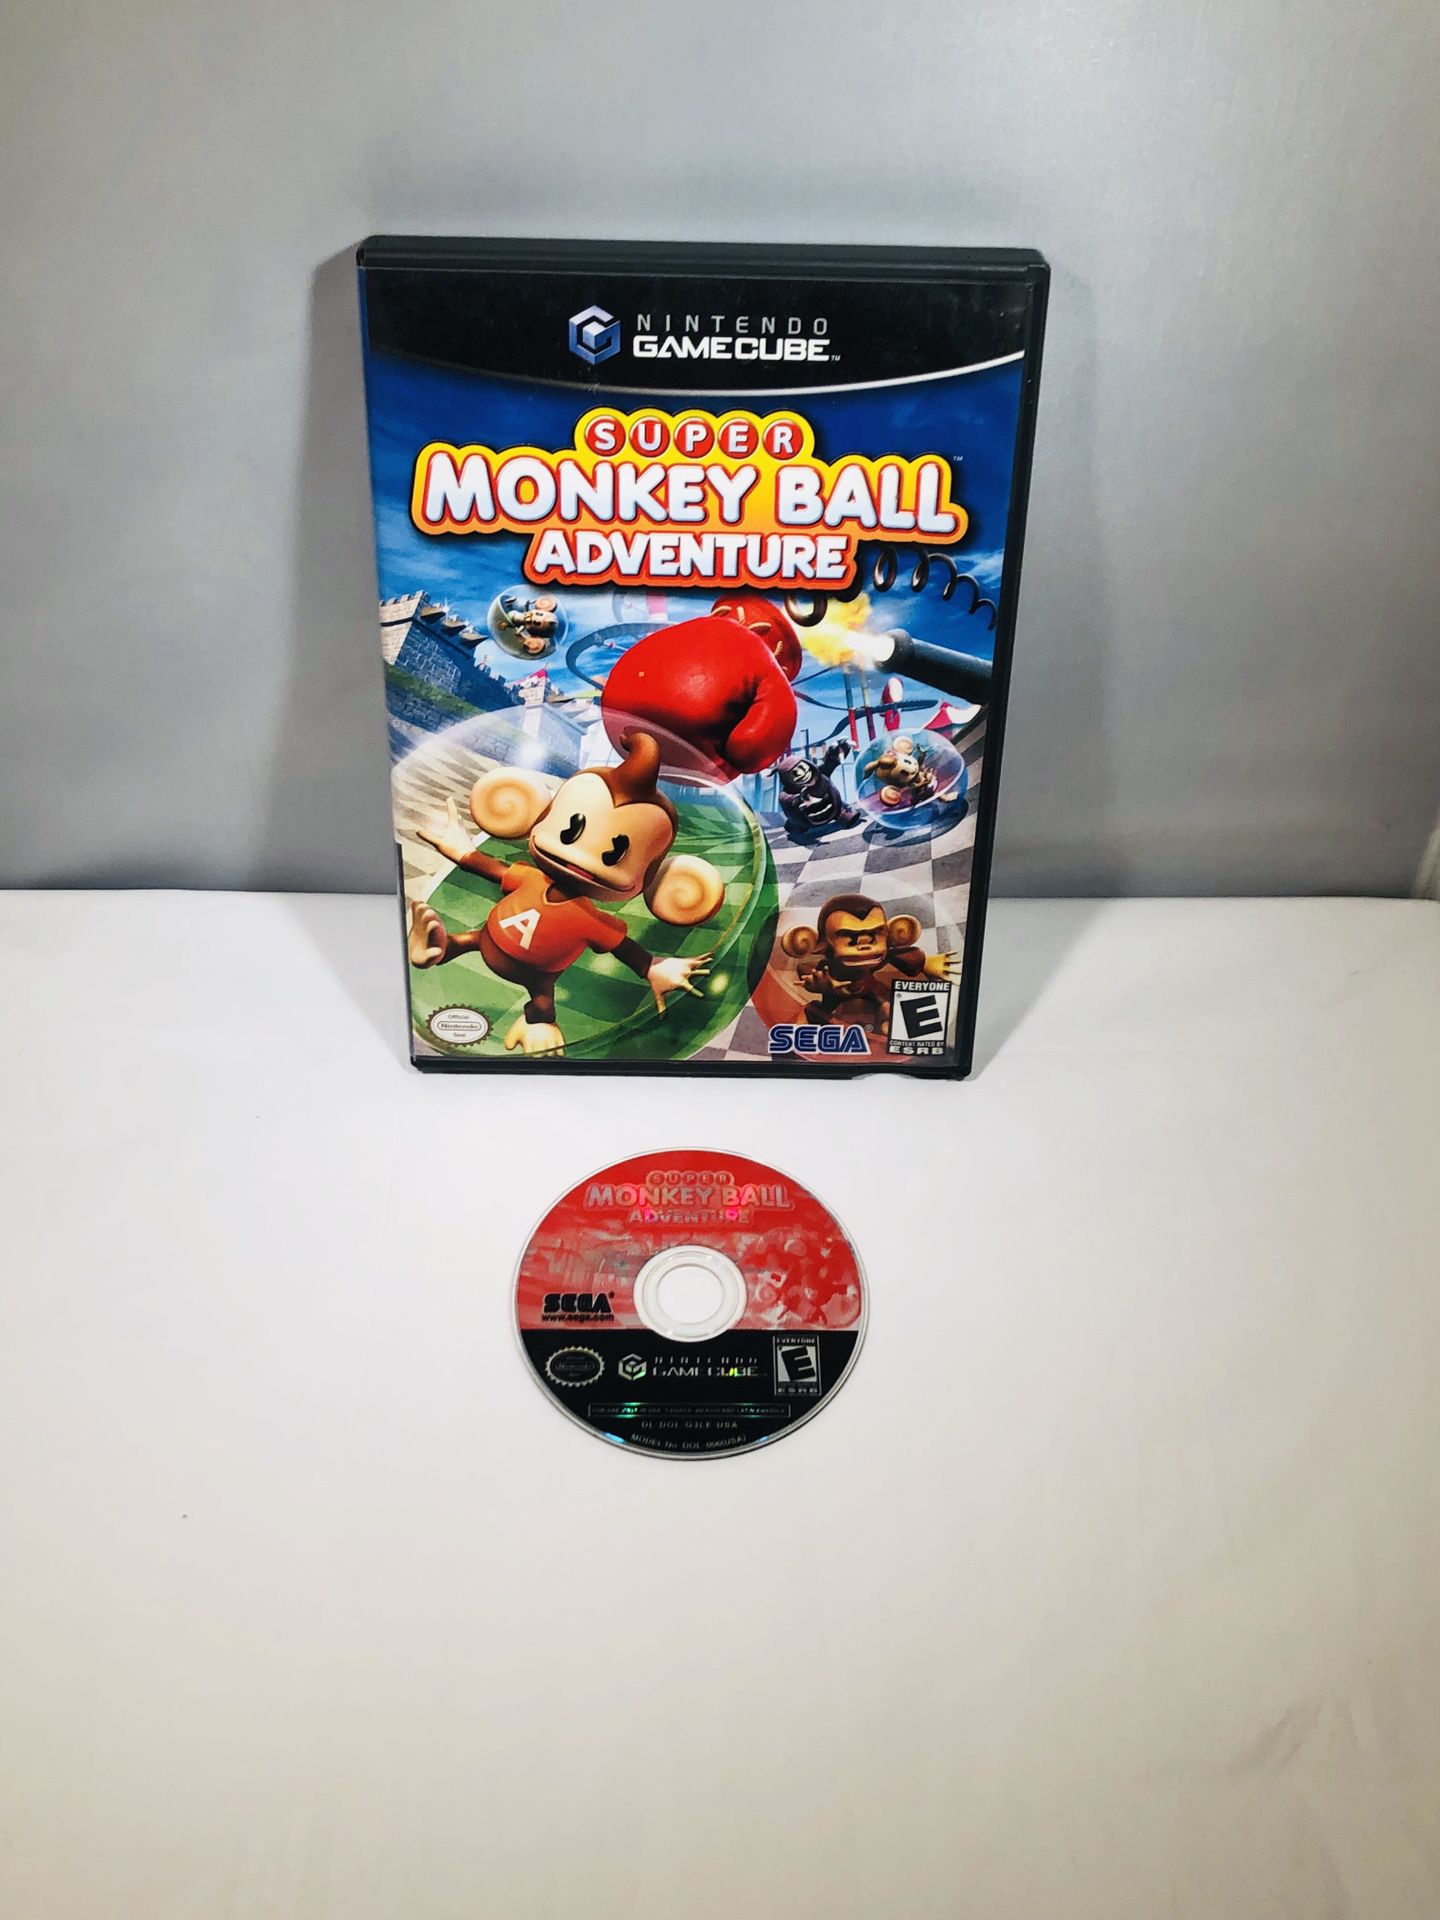 Super monkey ball adventure Nintendo GameCube